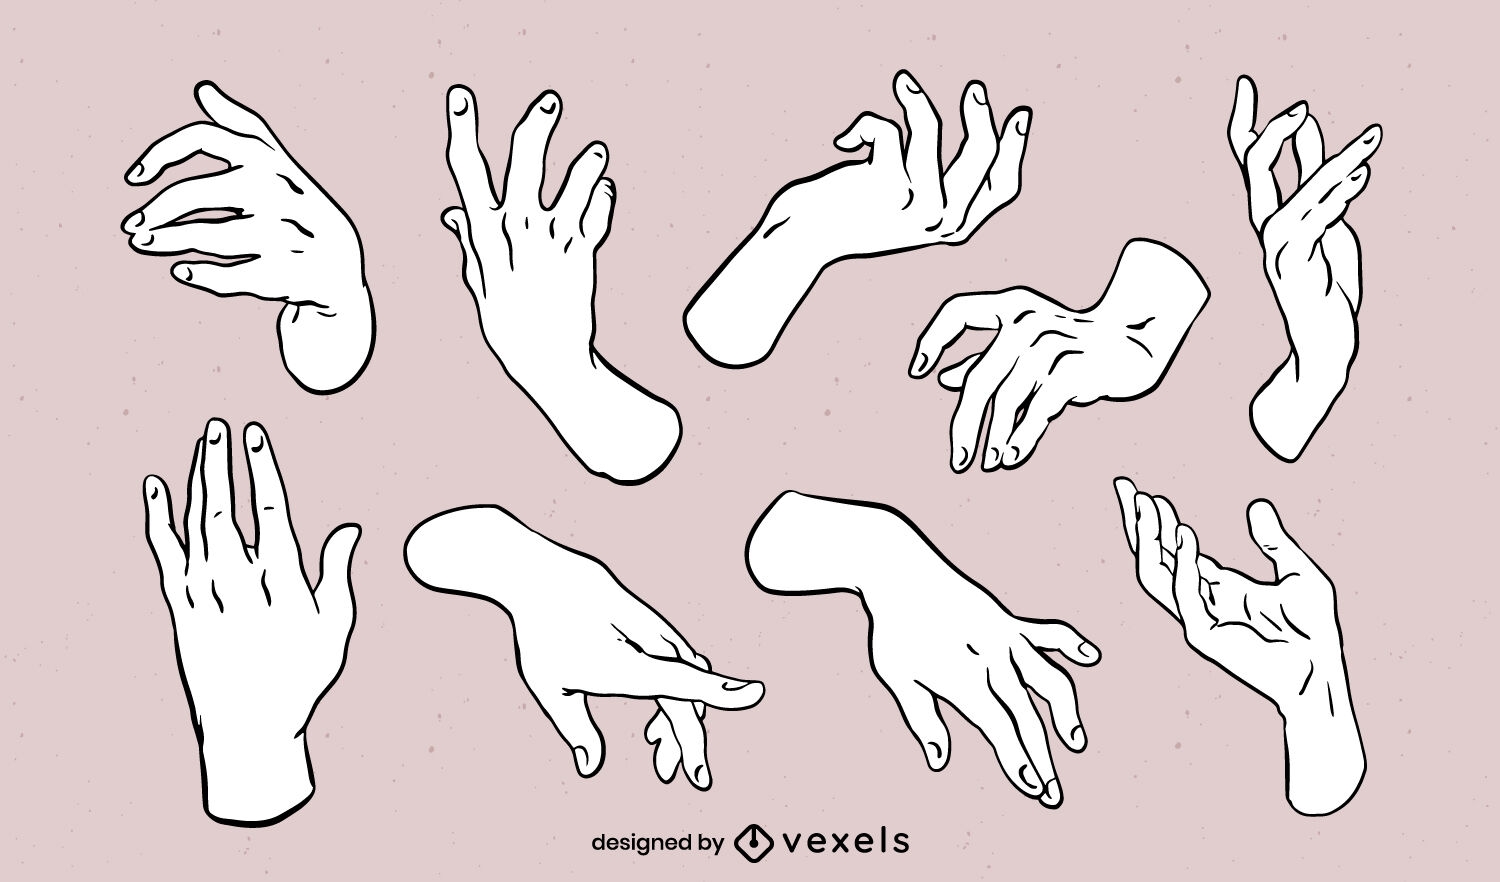 How To Draw Japanese Manga Anime Hand gesture illustration pose collection  Otaku | eBay